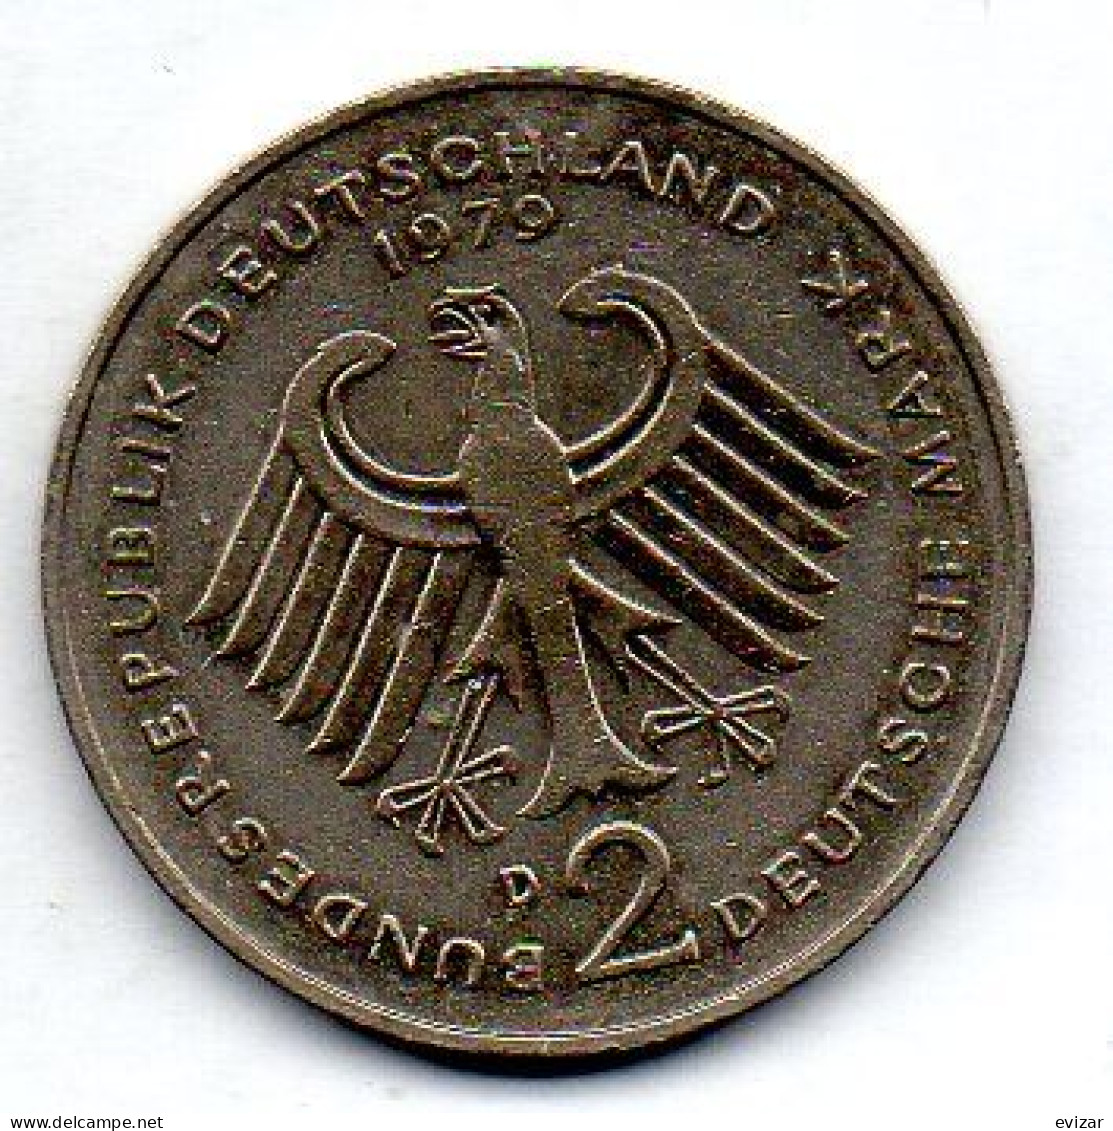 GERMANY - FEDERAL REPUBLIC, 2 Mark, Copper-Nickel, Year 1979-D, KM # 124 - 2 Marchi